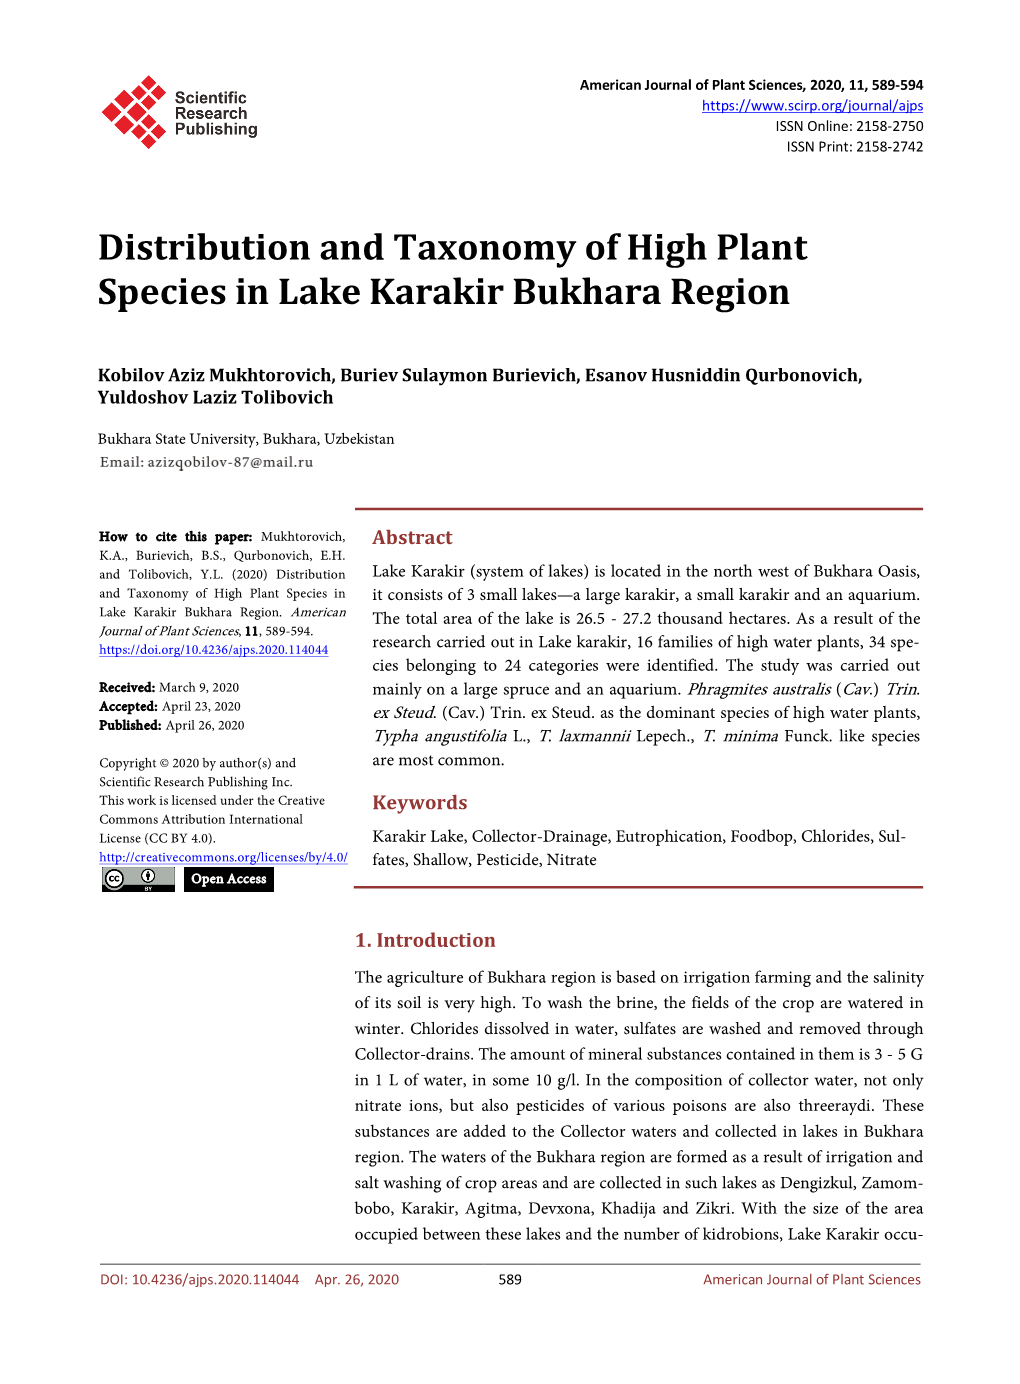 Distribution and Taxonomy of High Plant Species in Lake Karakir Bukhara Region